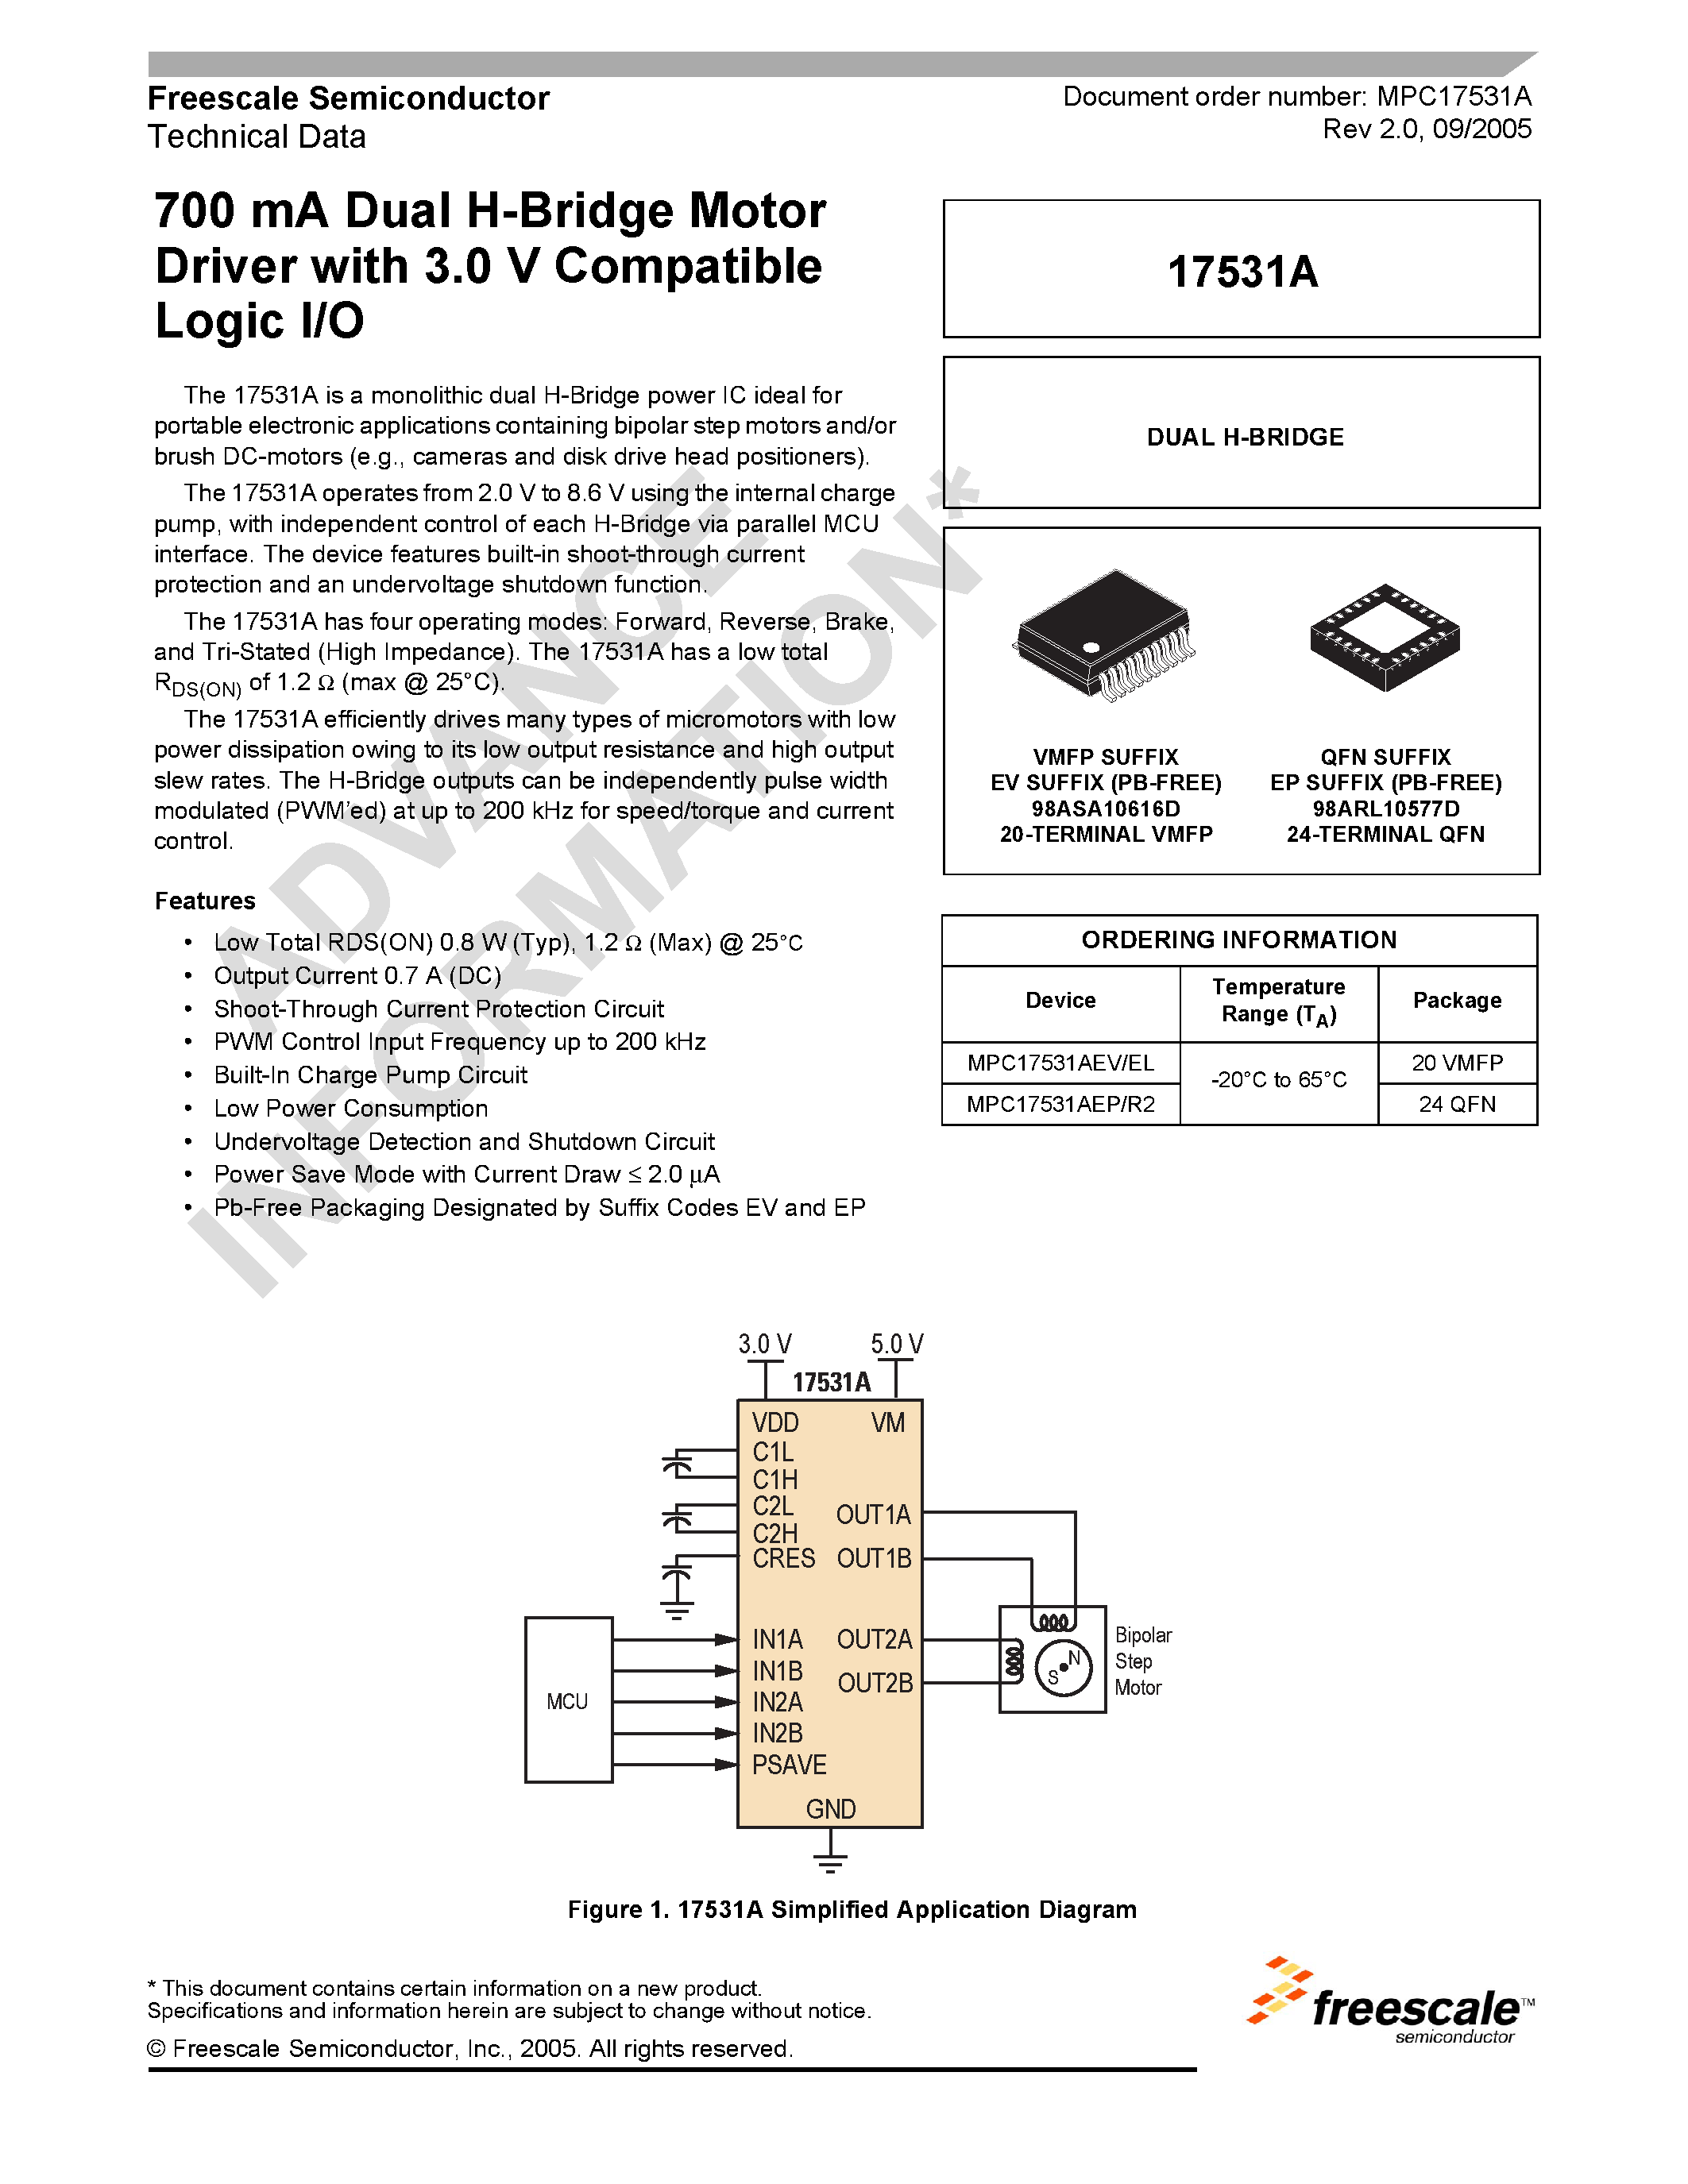 Даташит MPC17531A - 700mA Dual H-Bridge Motor Driver with 3.0V Compatible Logic I/O страница 1